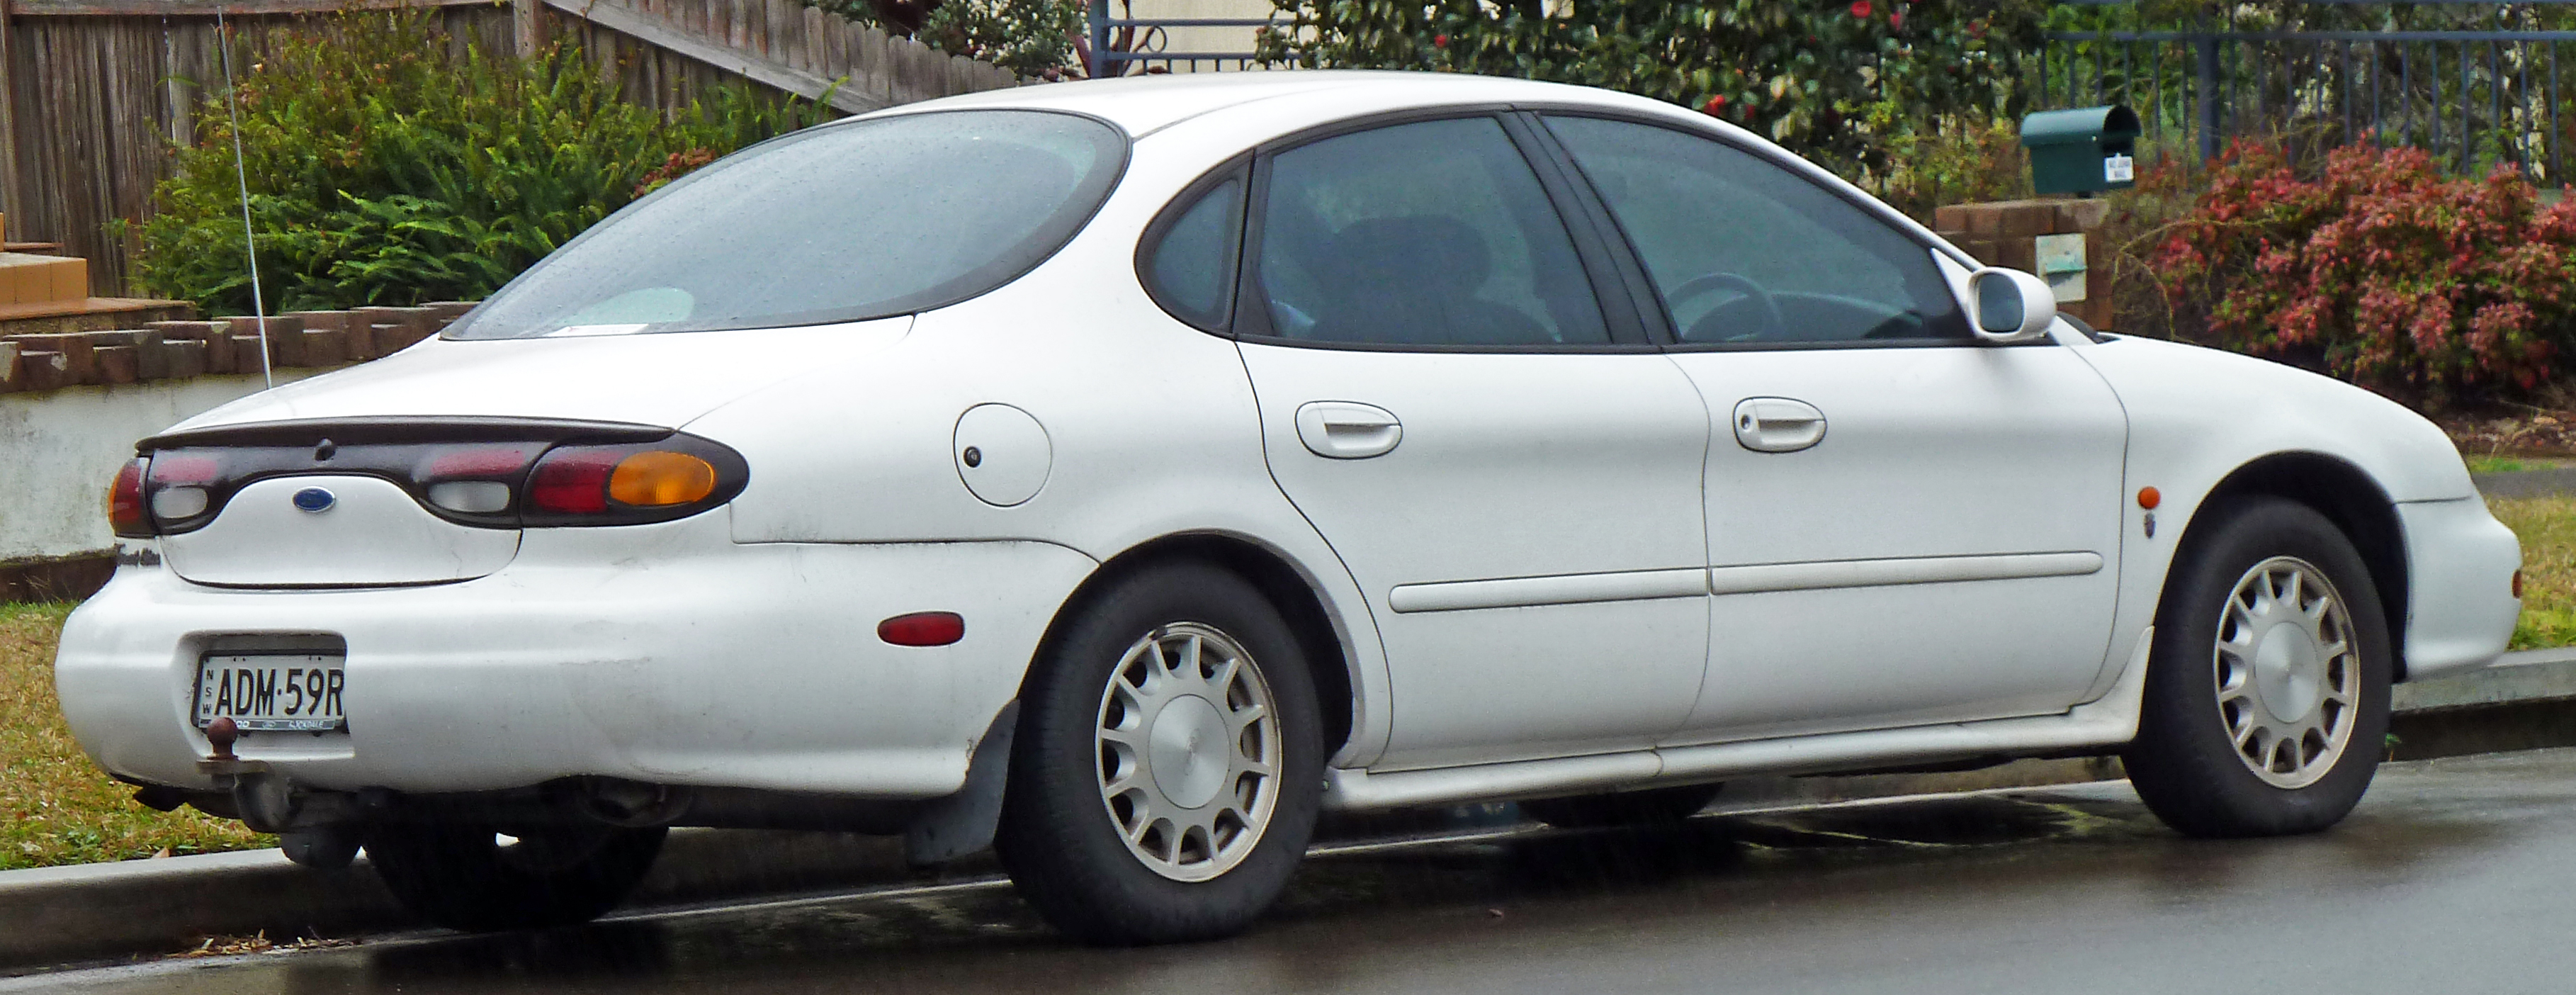 ford taurus 1996 tire